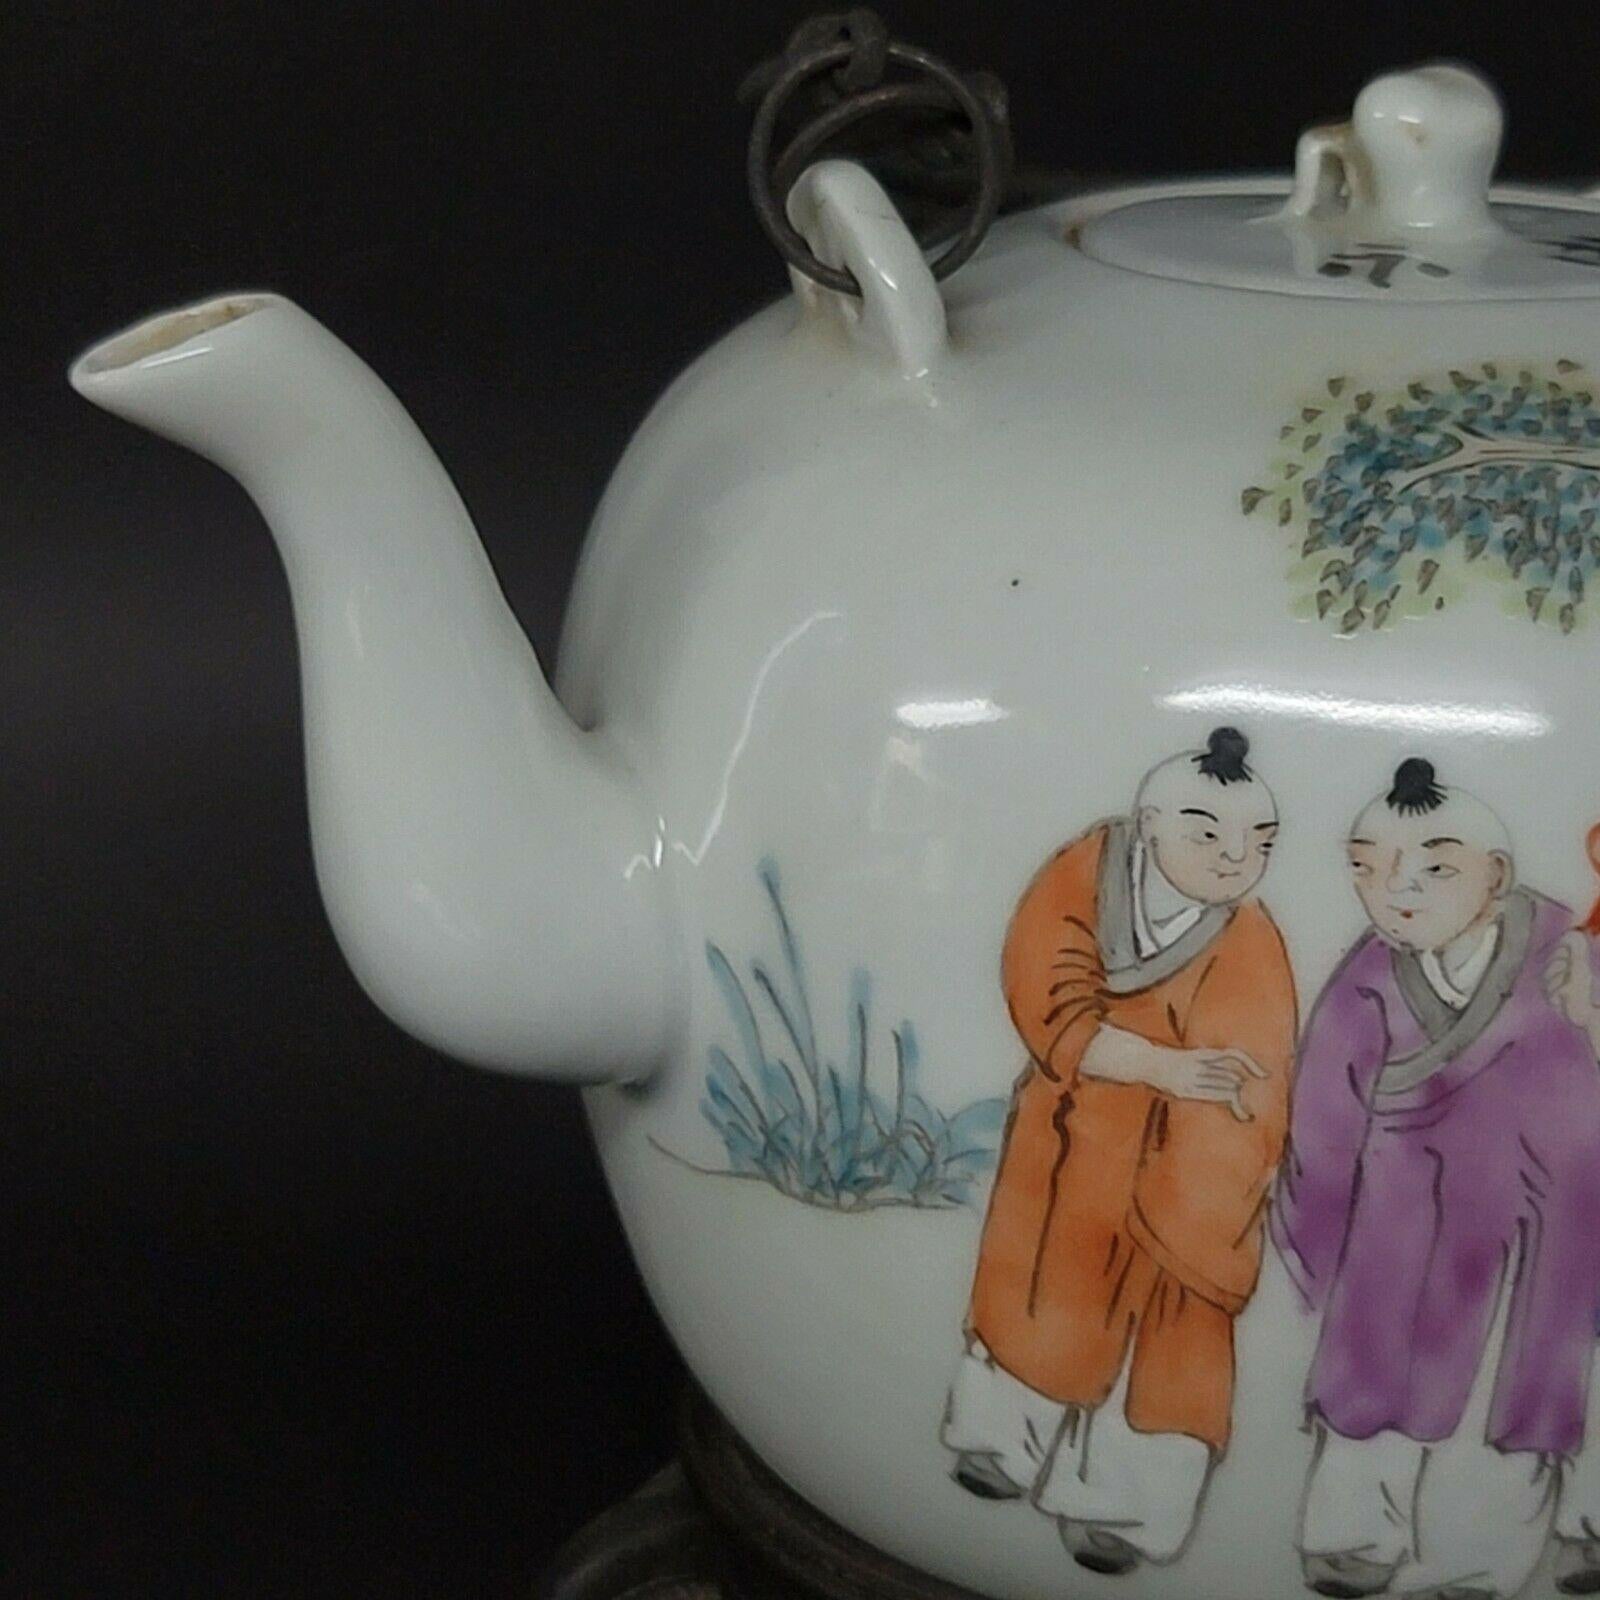 19th century teapot